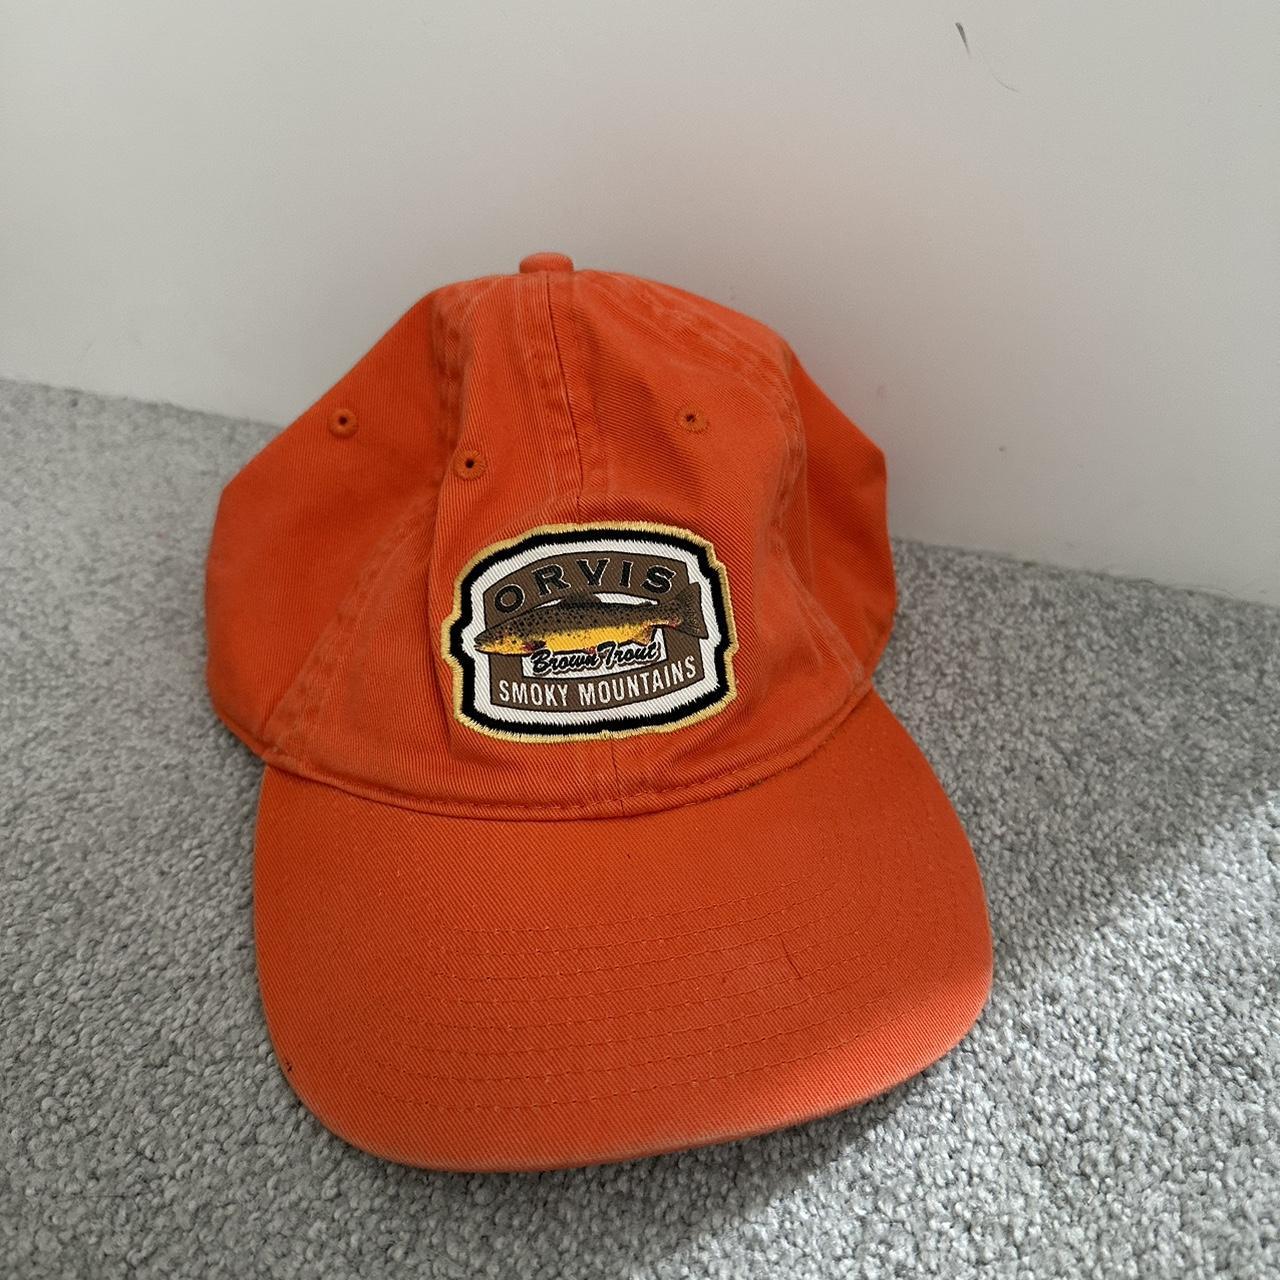 Vintage Orange adjustable fishing hat from Orvis - Depop